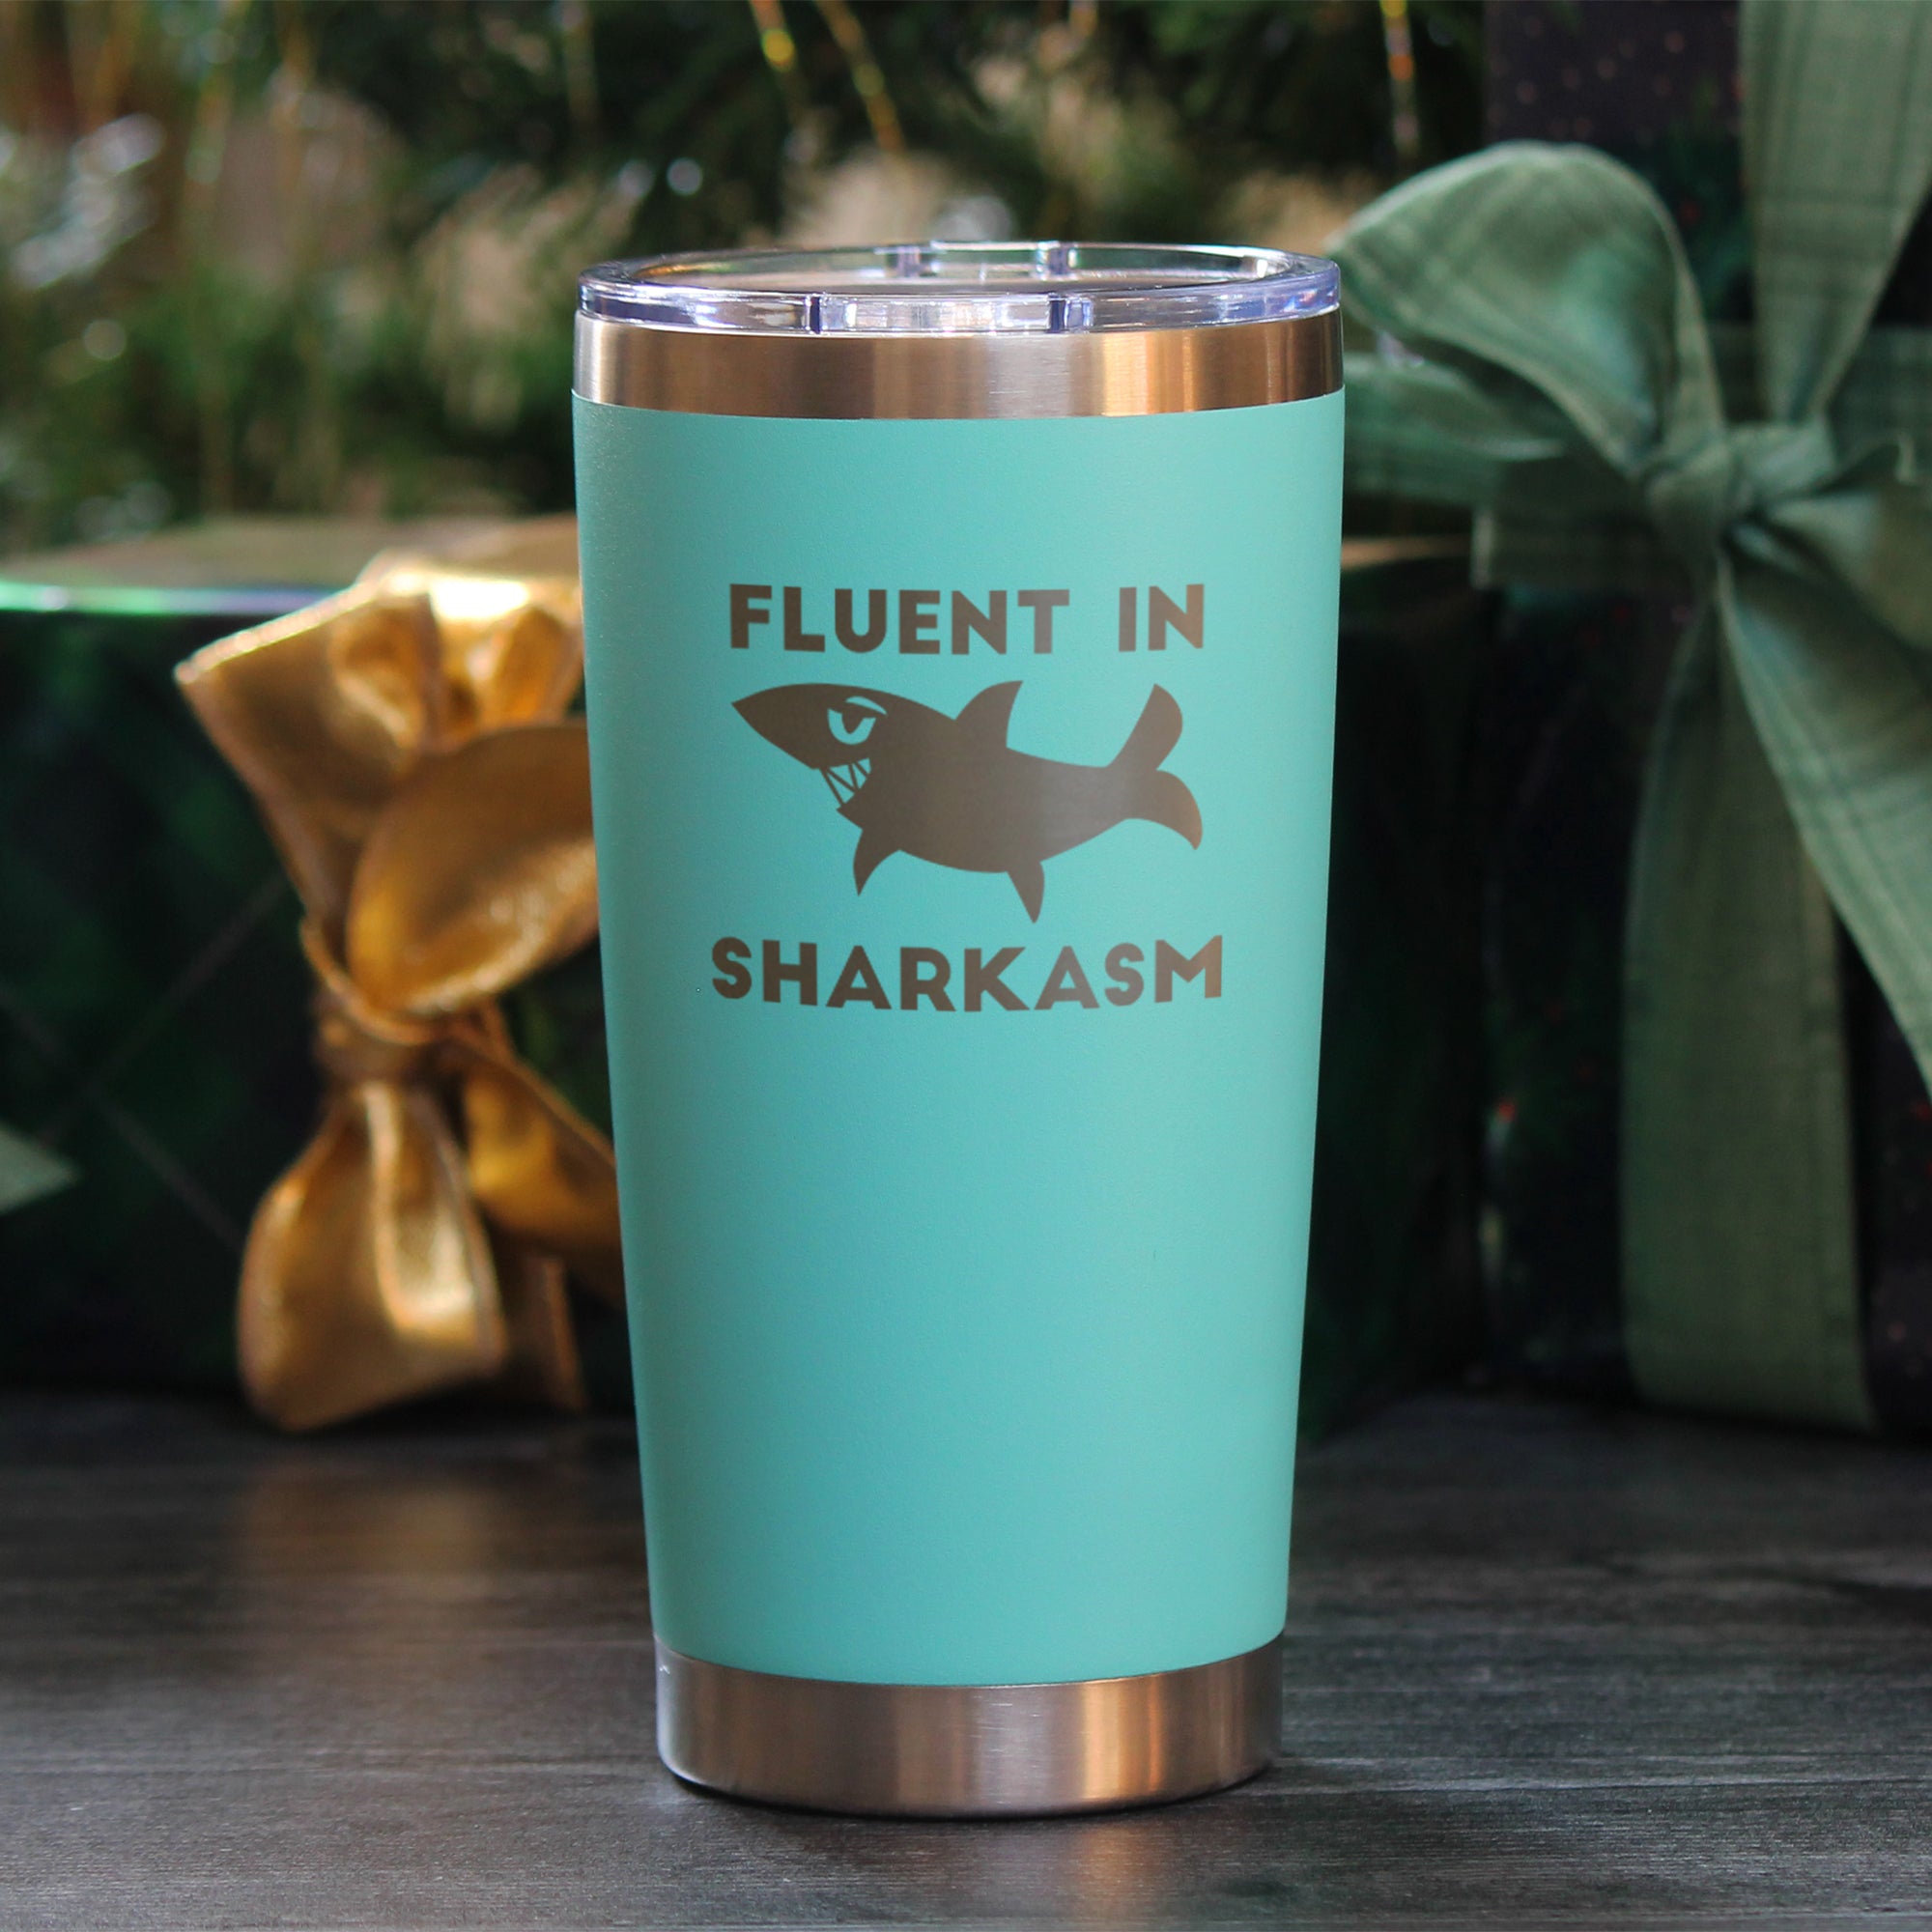 Fluent in Sharkasm